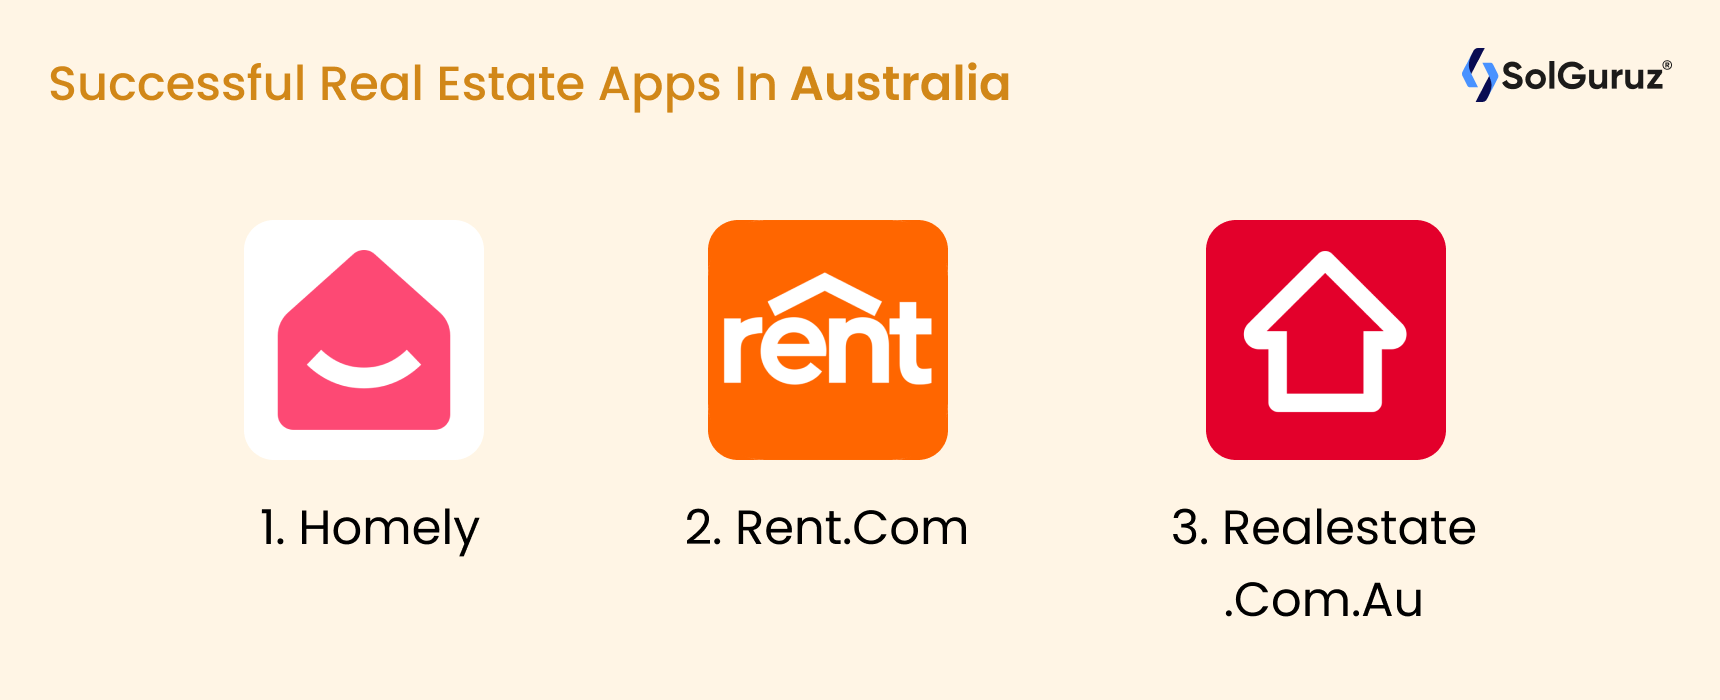 Successful real estate apps in Australia